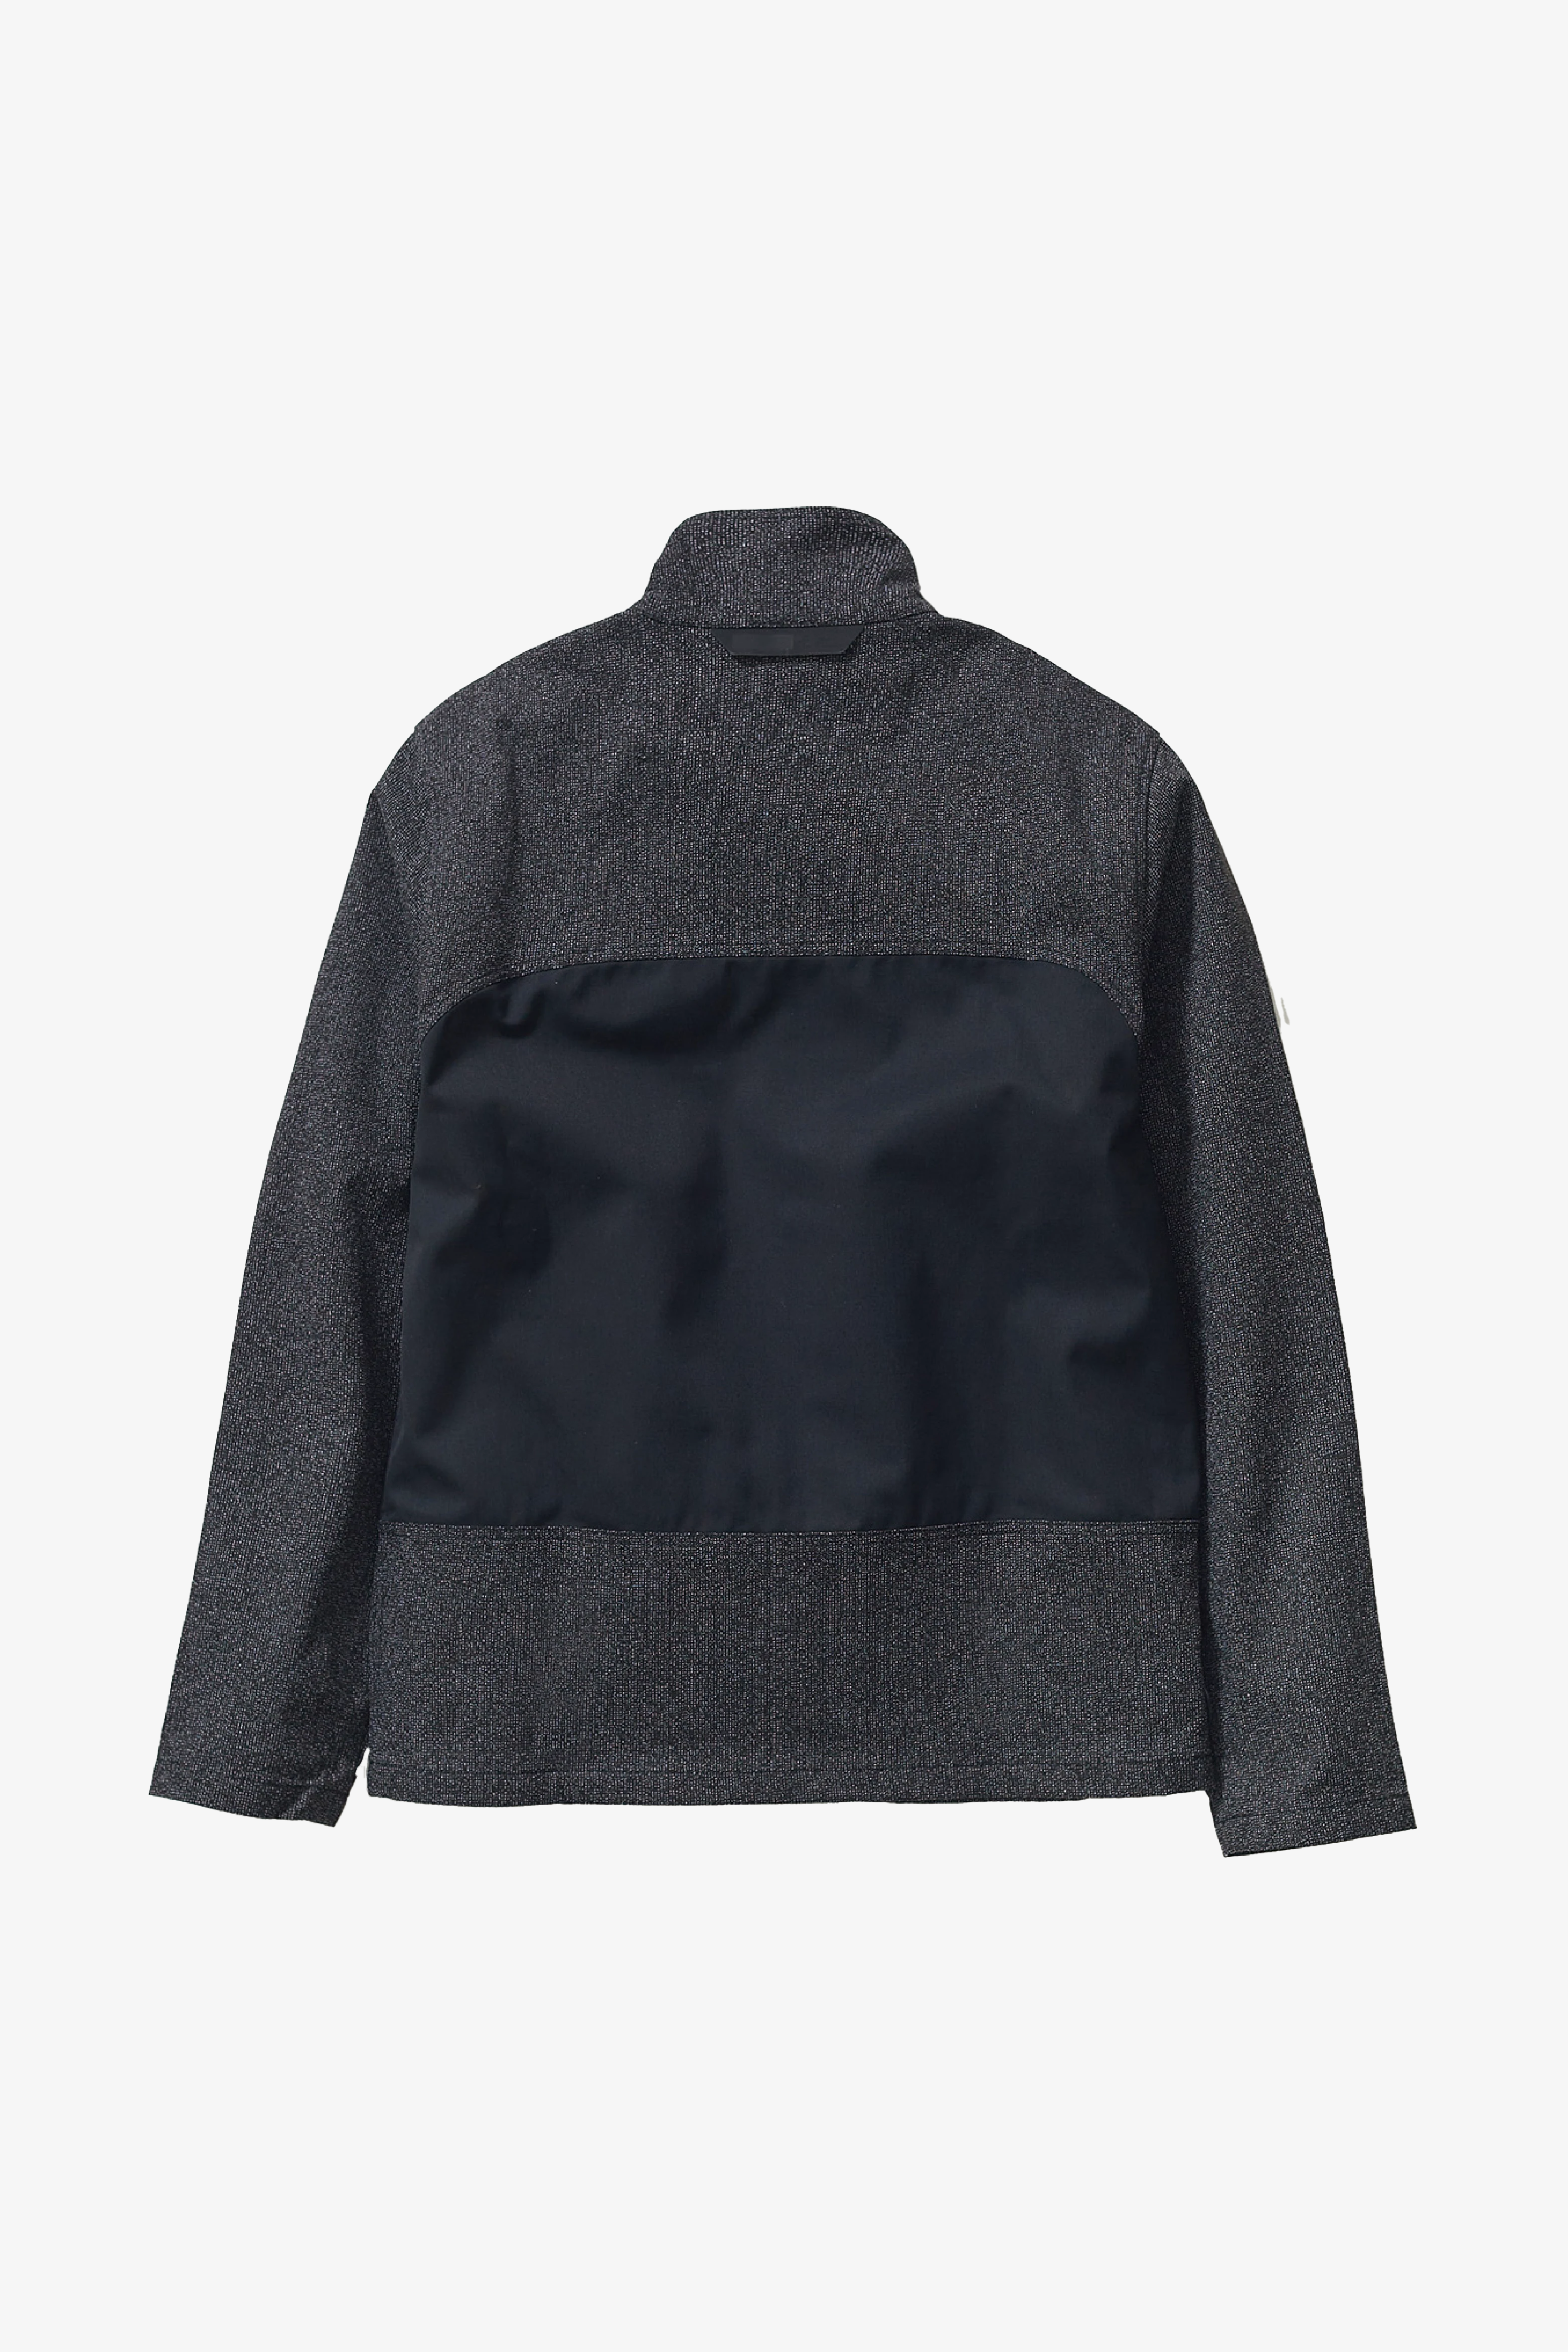 Selectshop FRAME - AFFIX Work Jacket Outerwear Dubai